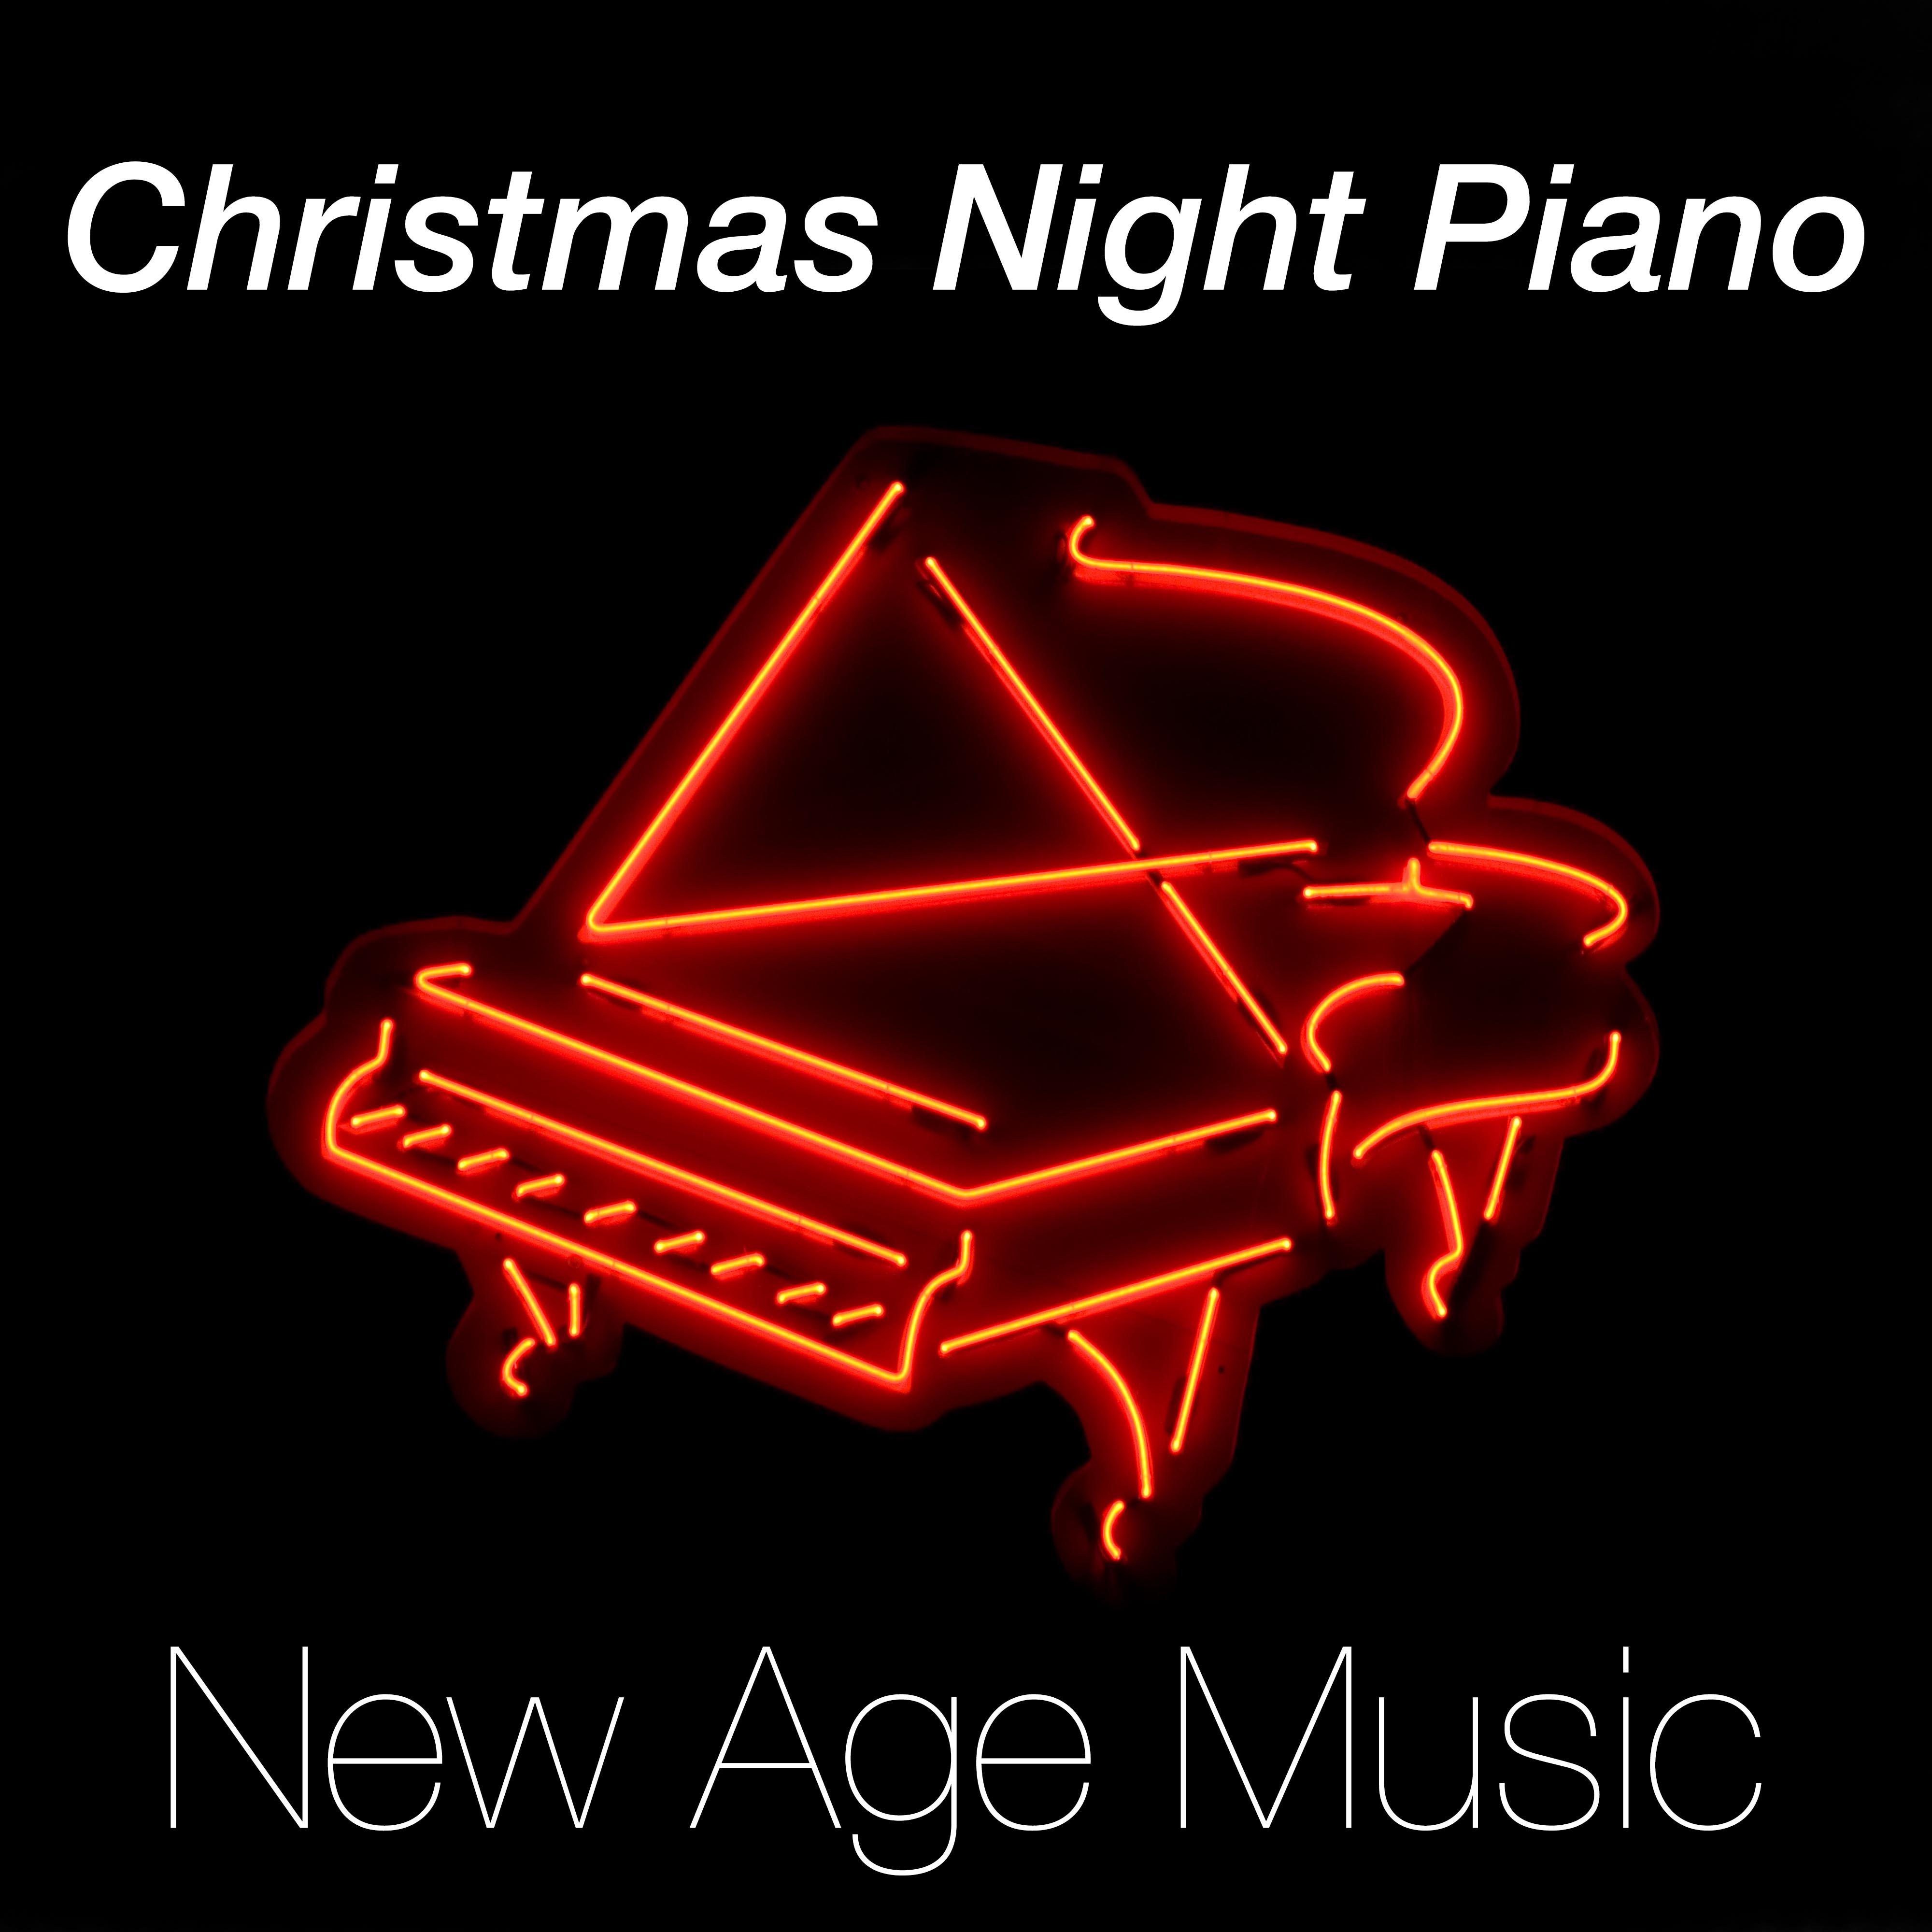 Christmas Night Piano - New Age Music and Piano Lullabies to help you Sleep at Christmas Time